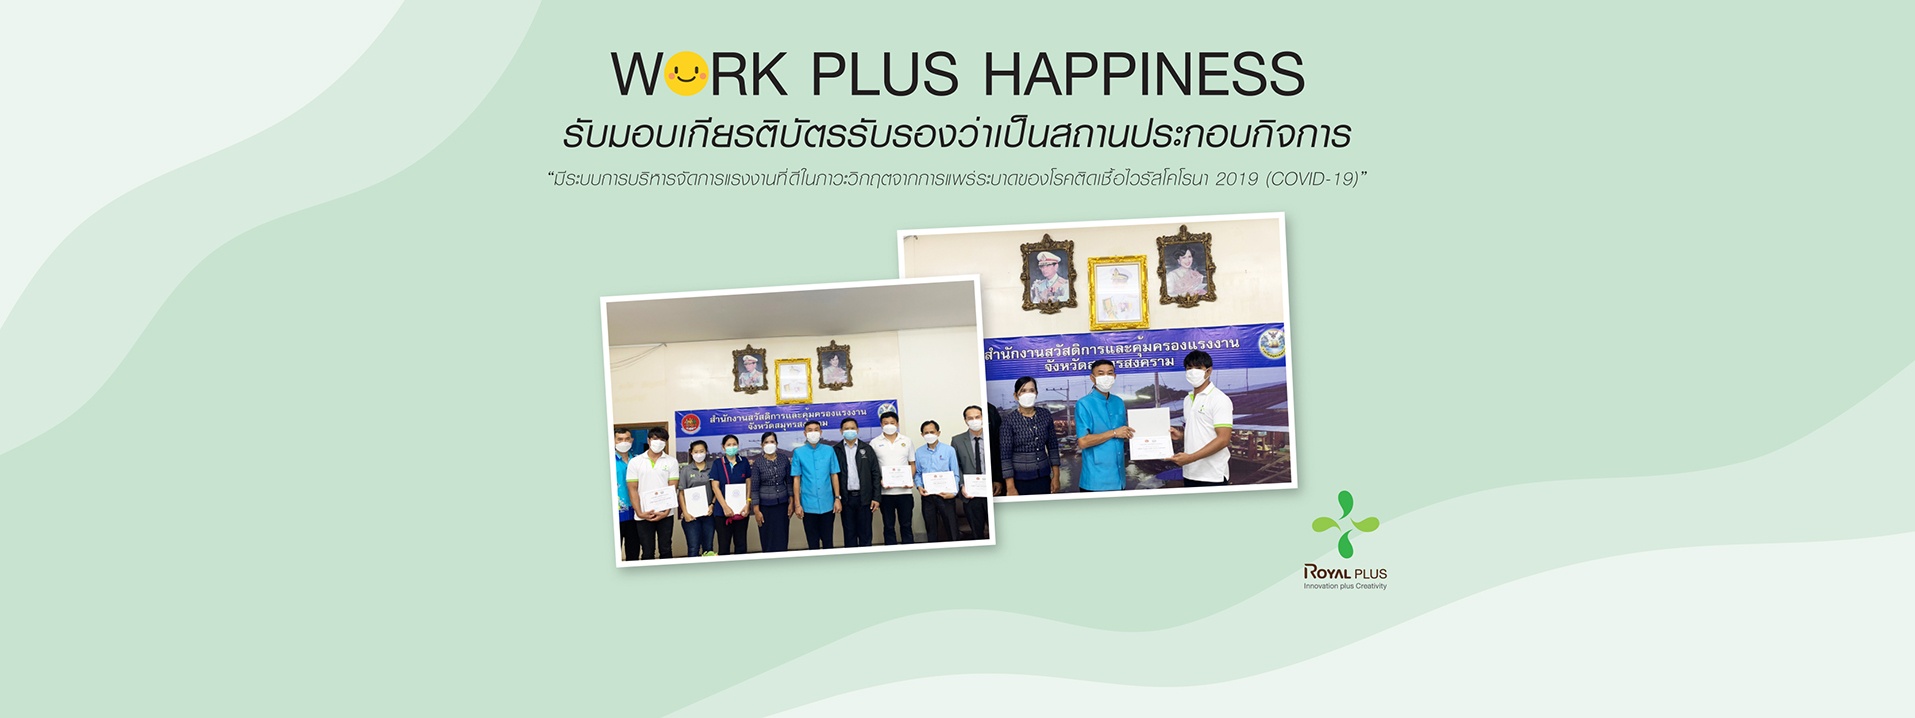 WORK PLUS HAPPINESS